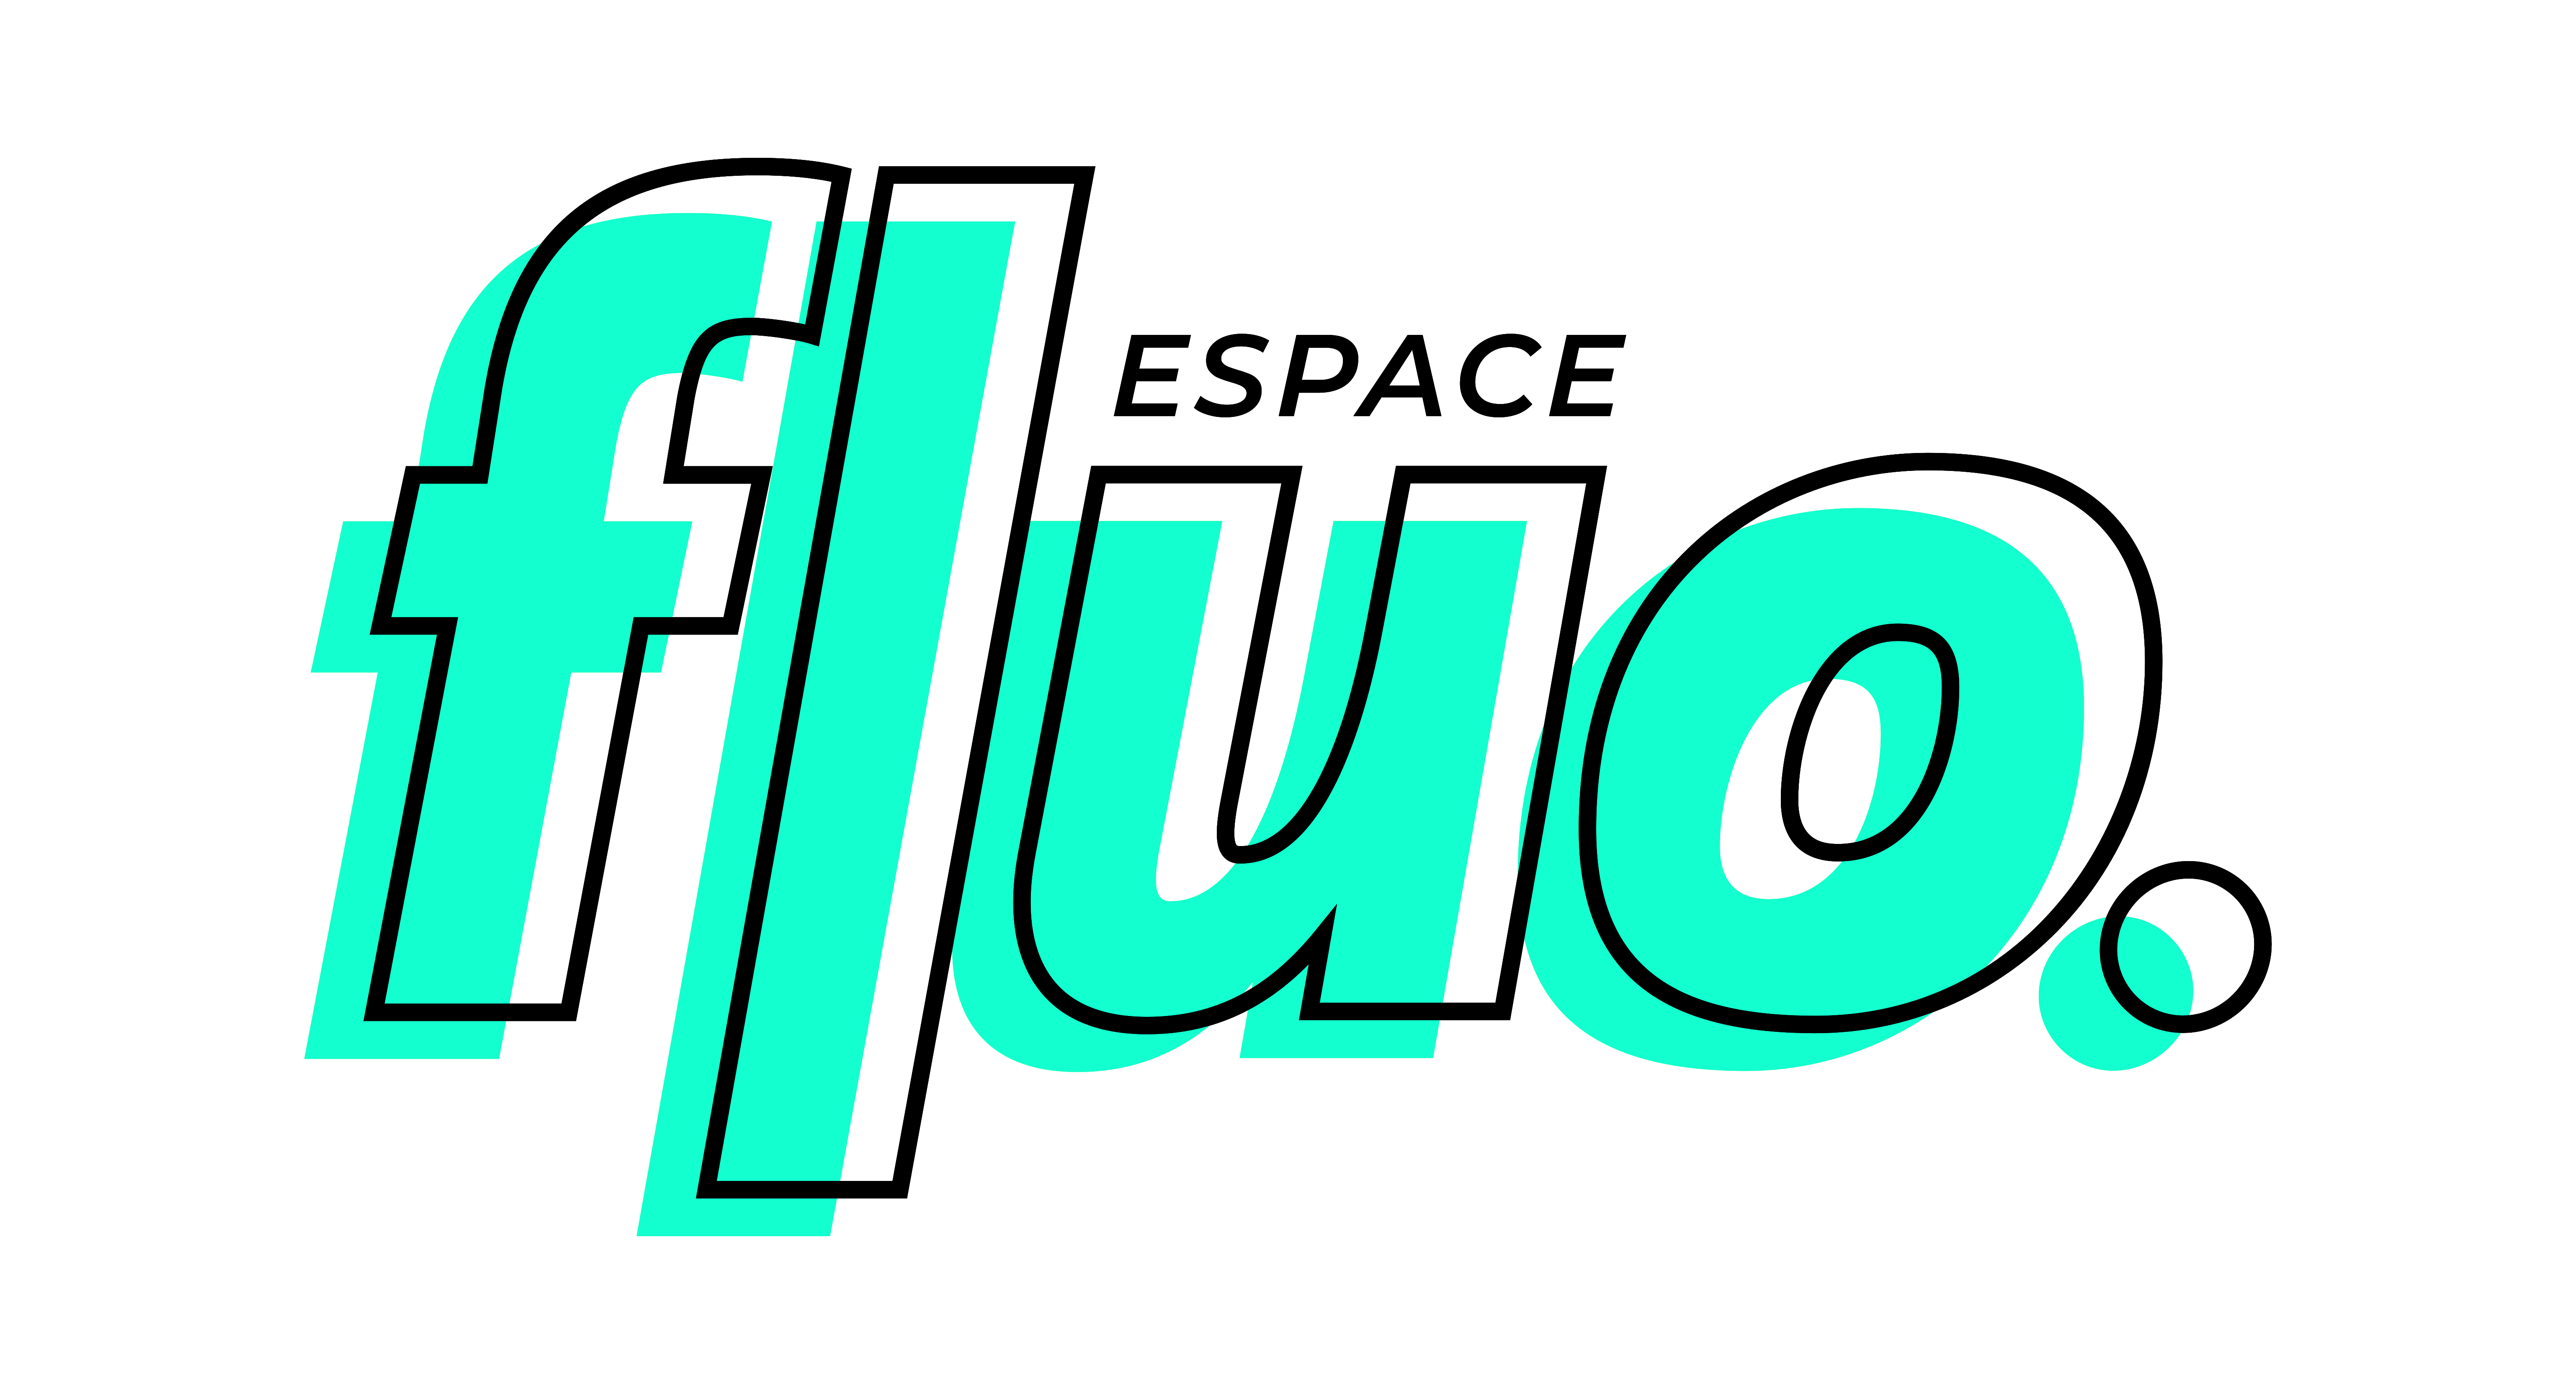 Espace Fluo